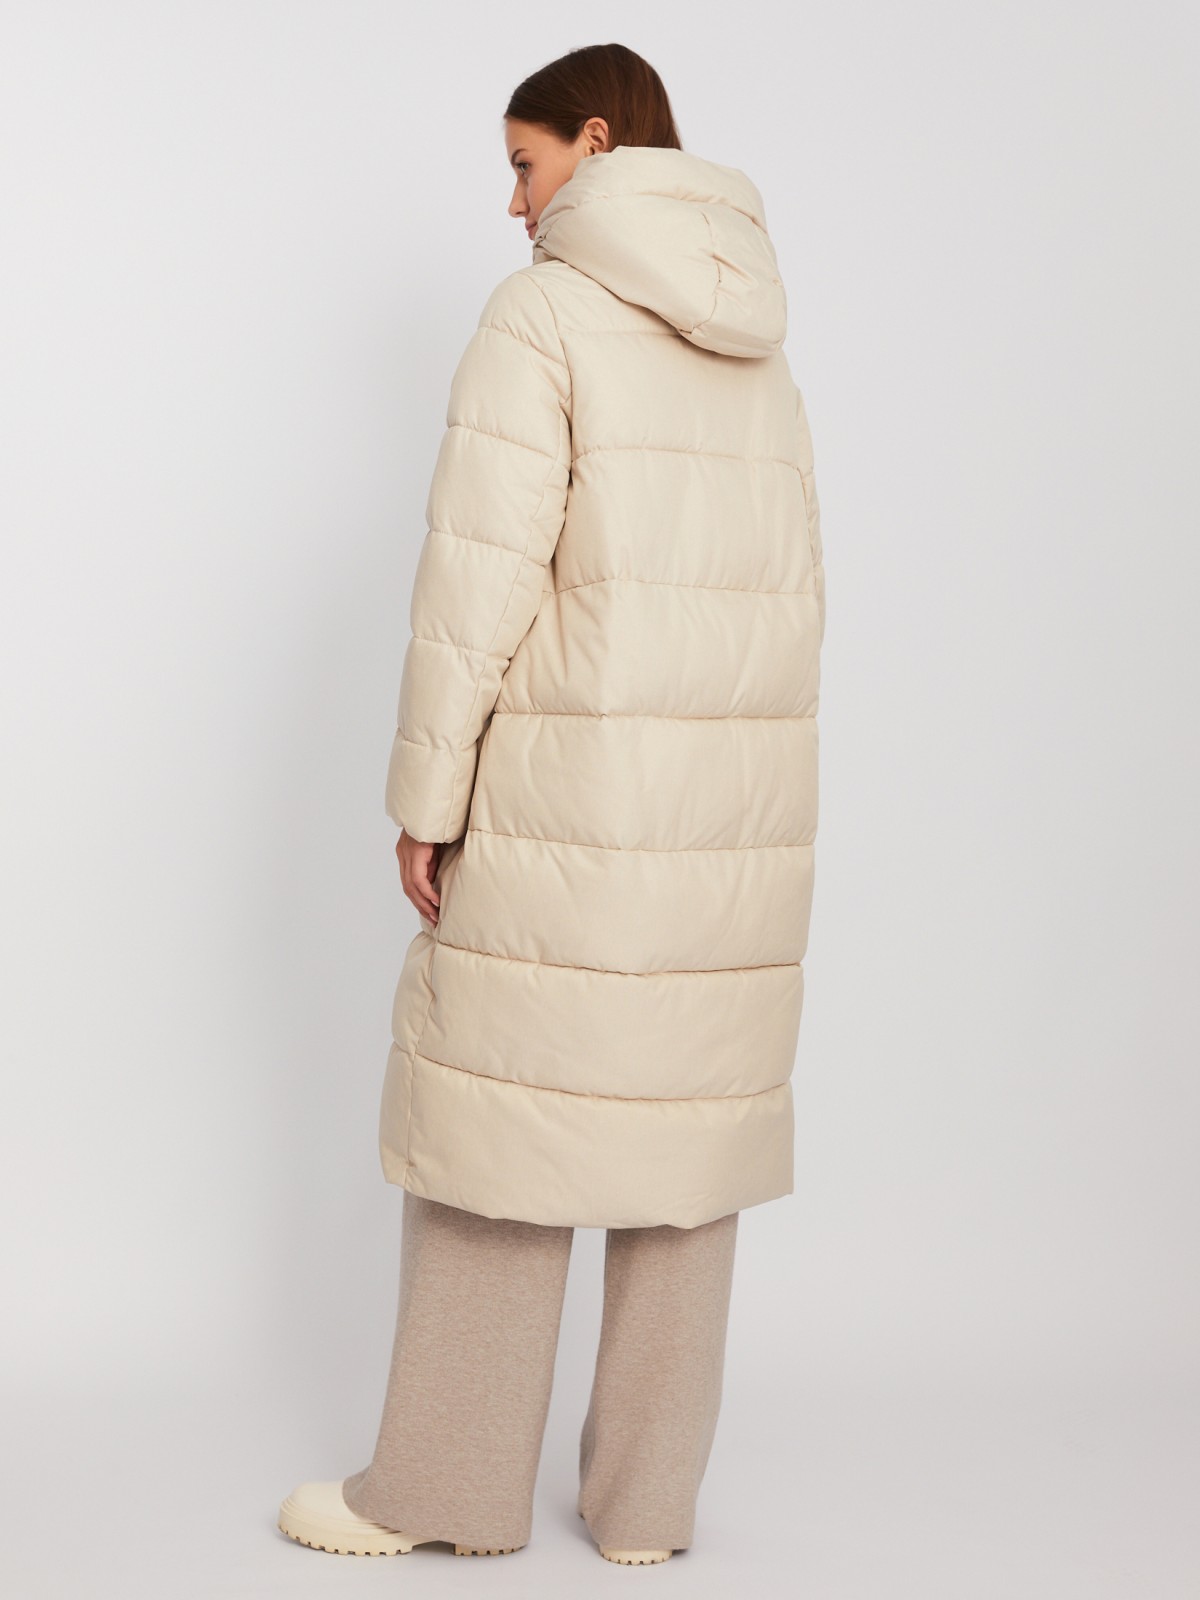 Тёплая длинная куртка-пальто с капюшоном